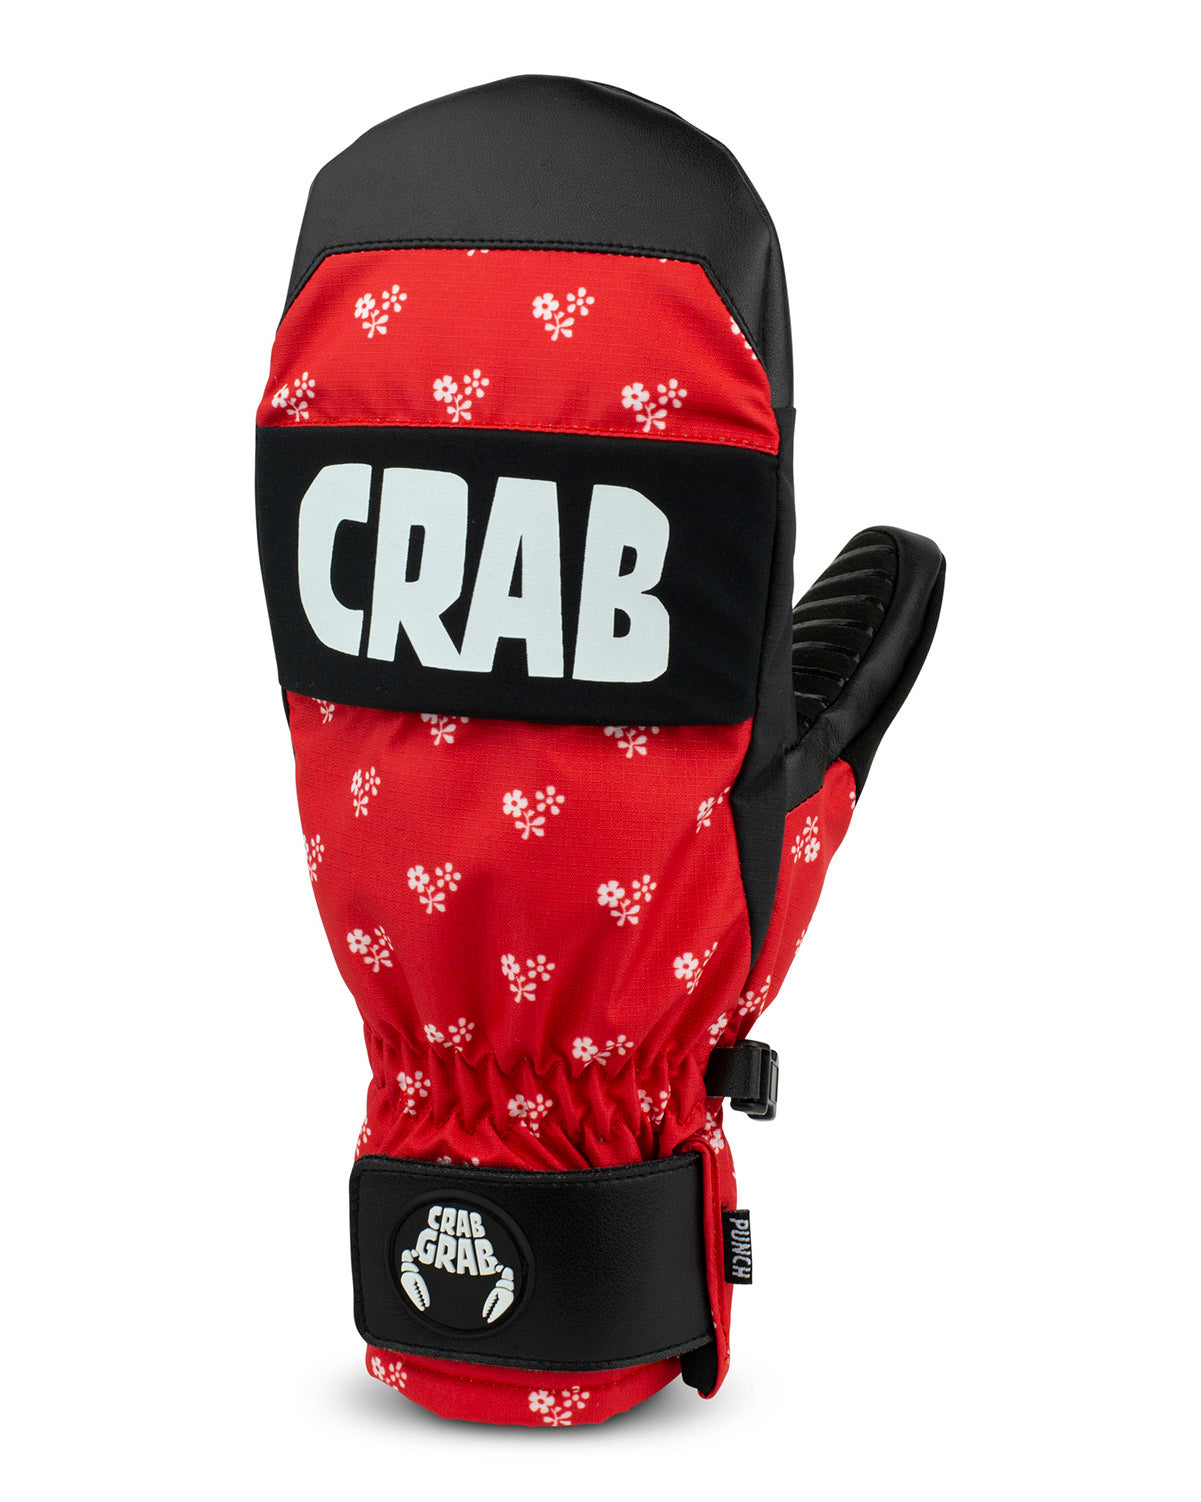 Adult Assorted Winter Ski Gloves – Crab Brand – Size Medium